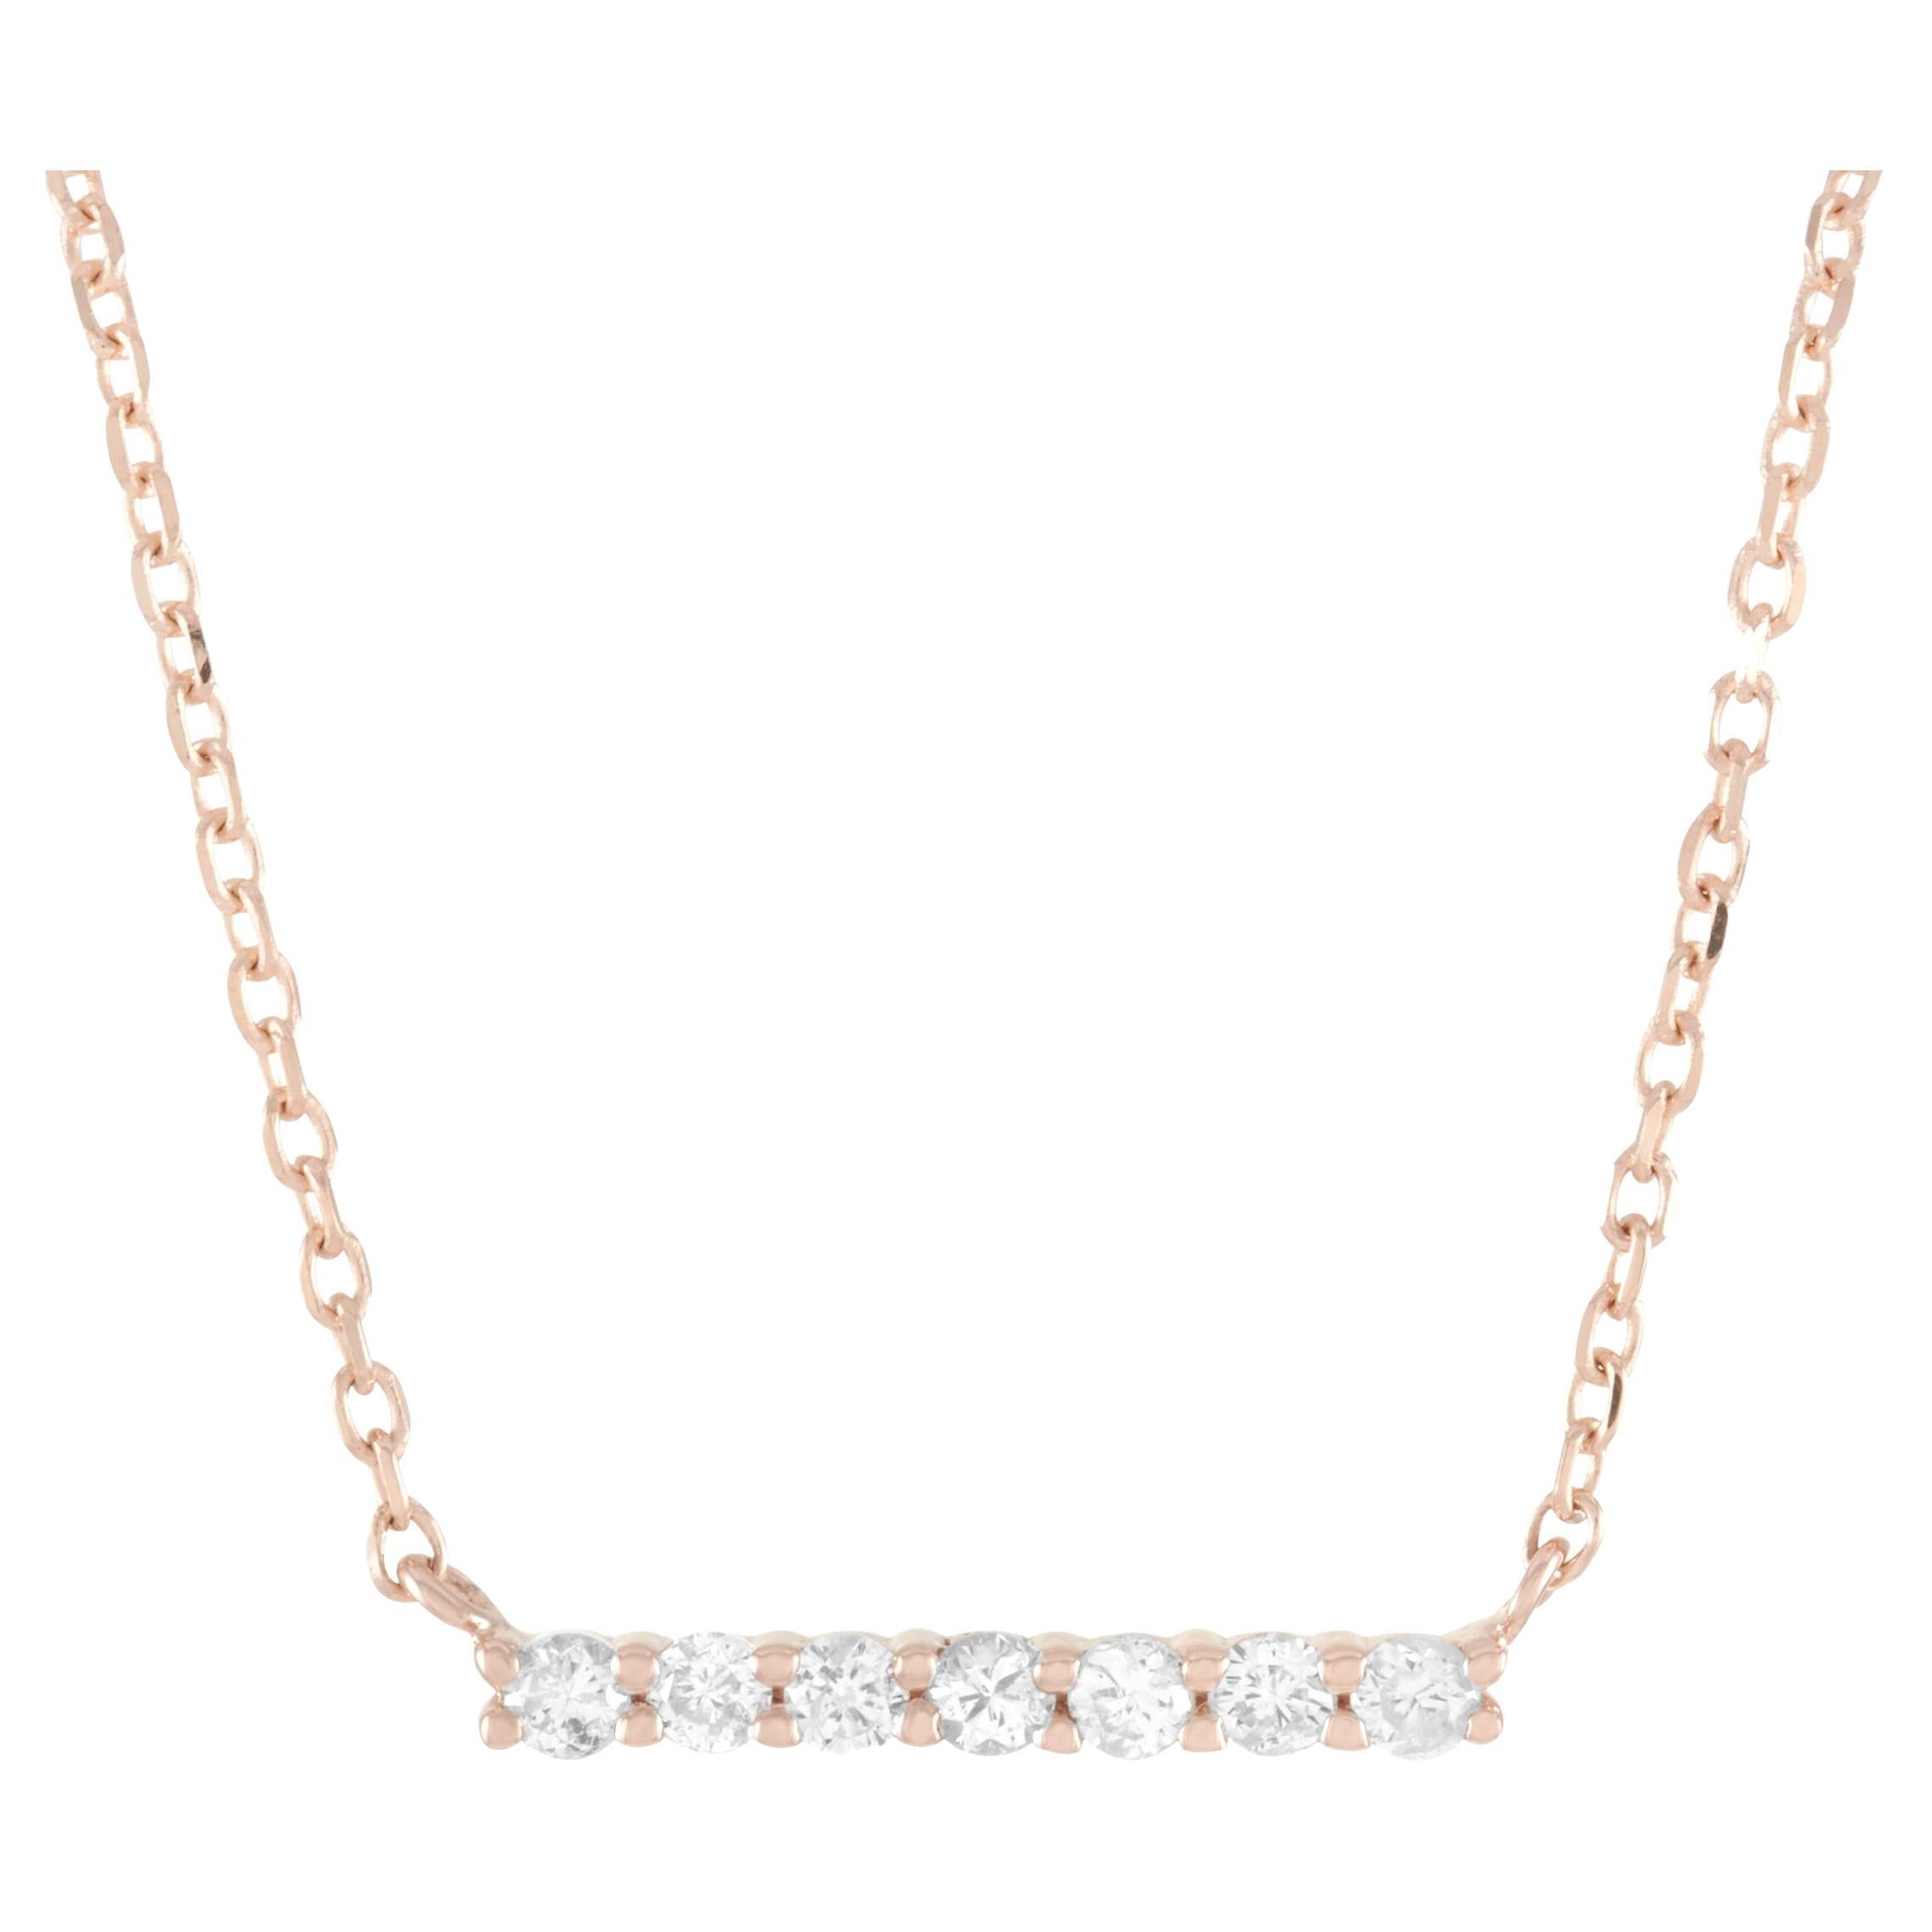 LB Exclusive 14K Rose Gold 0.10 Ct Diamond Necklace